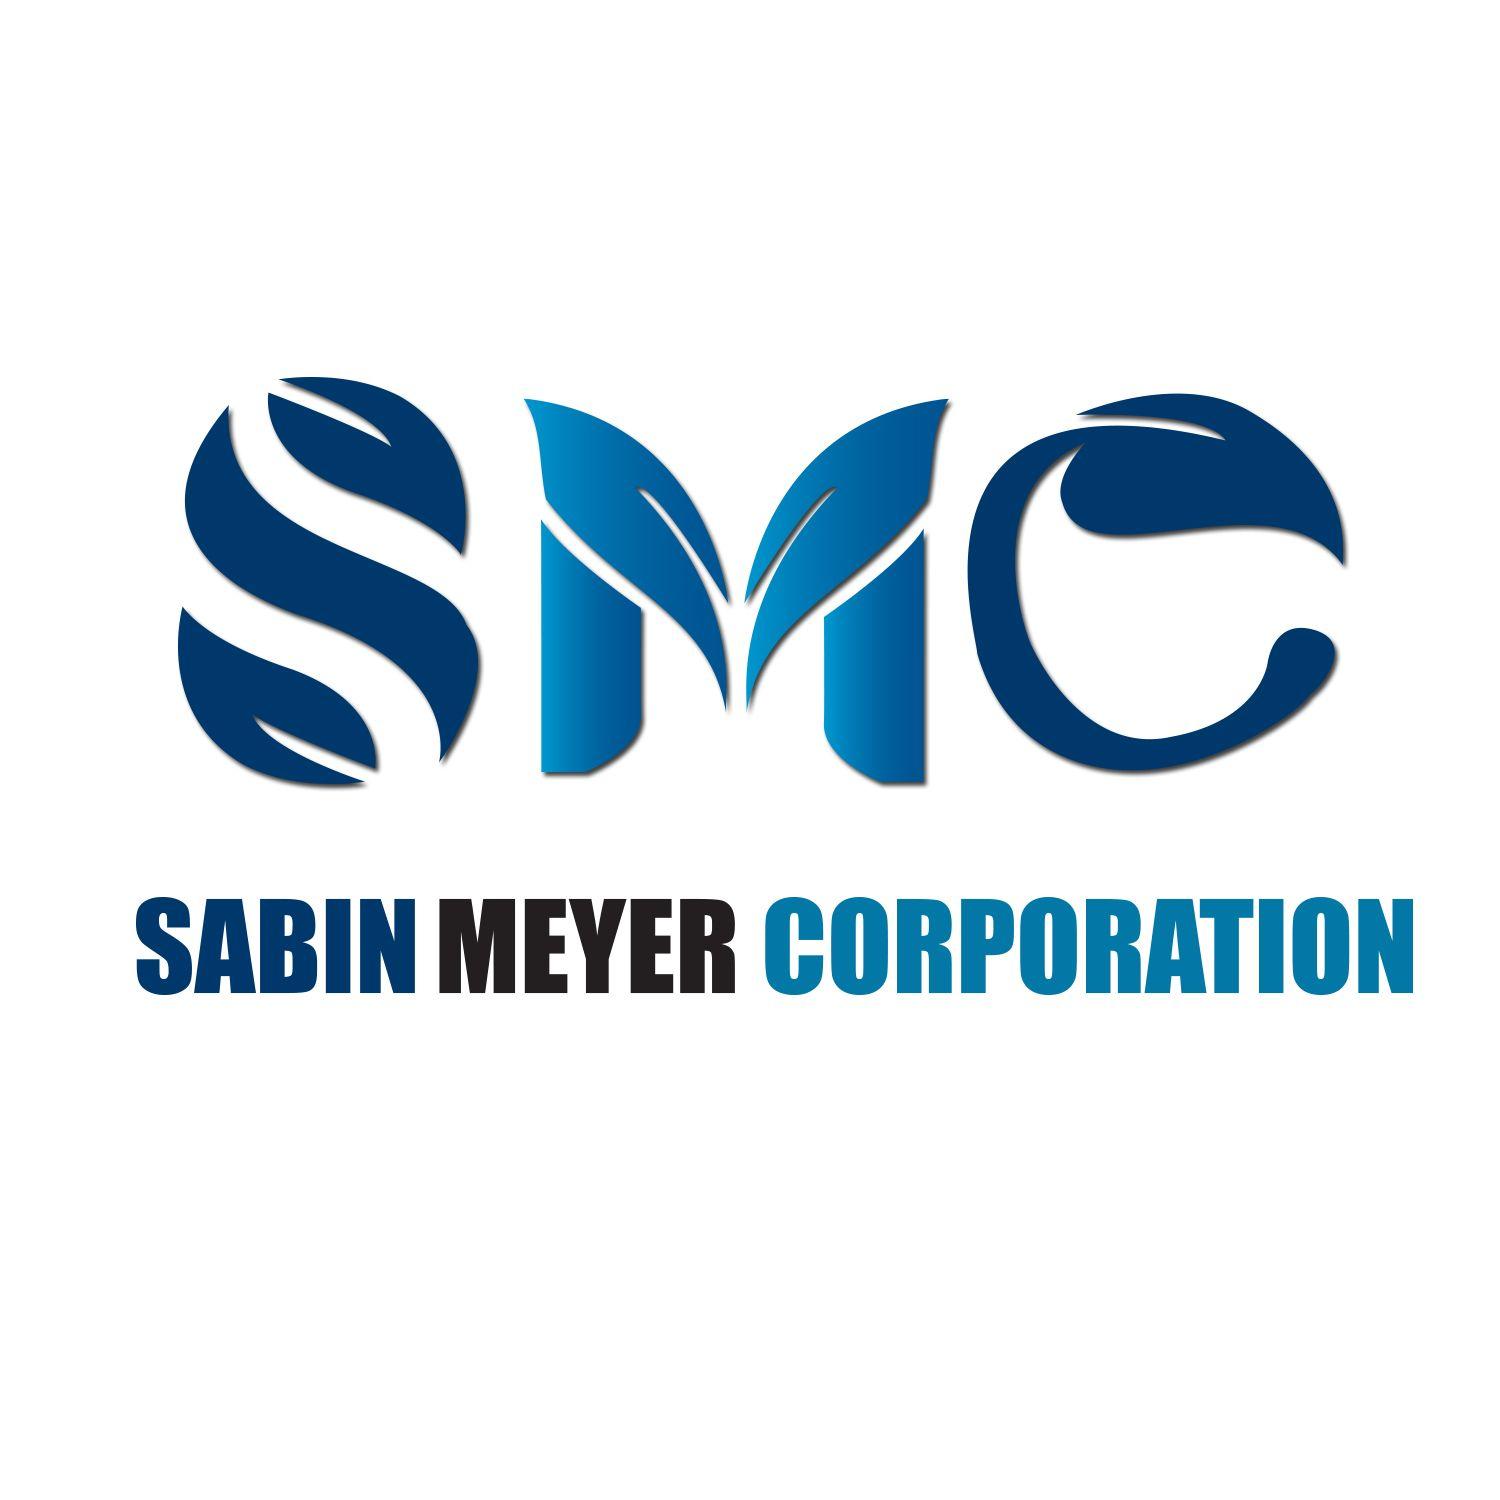 SMC Logo - Modern, Professional, Marketing Logo Design for SMC by jack7 ...